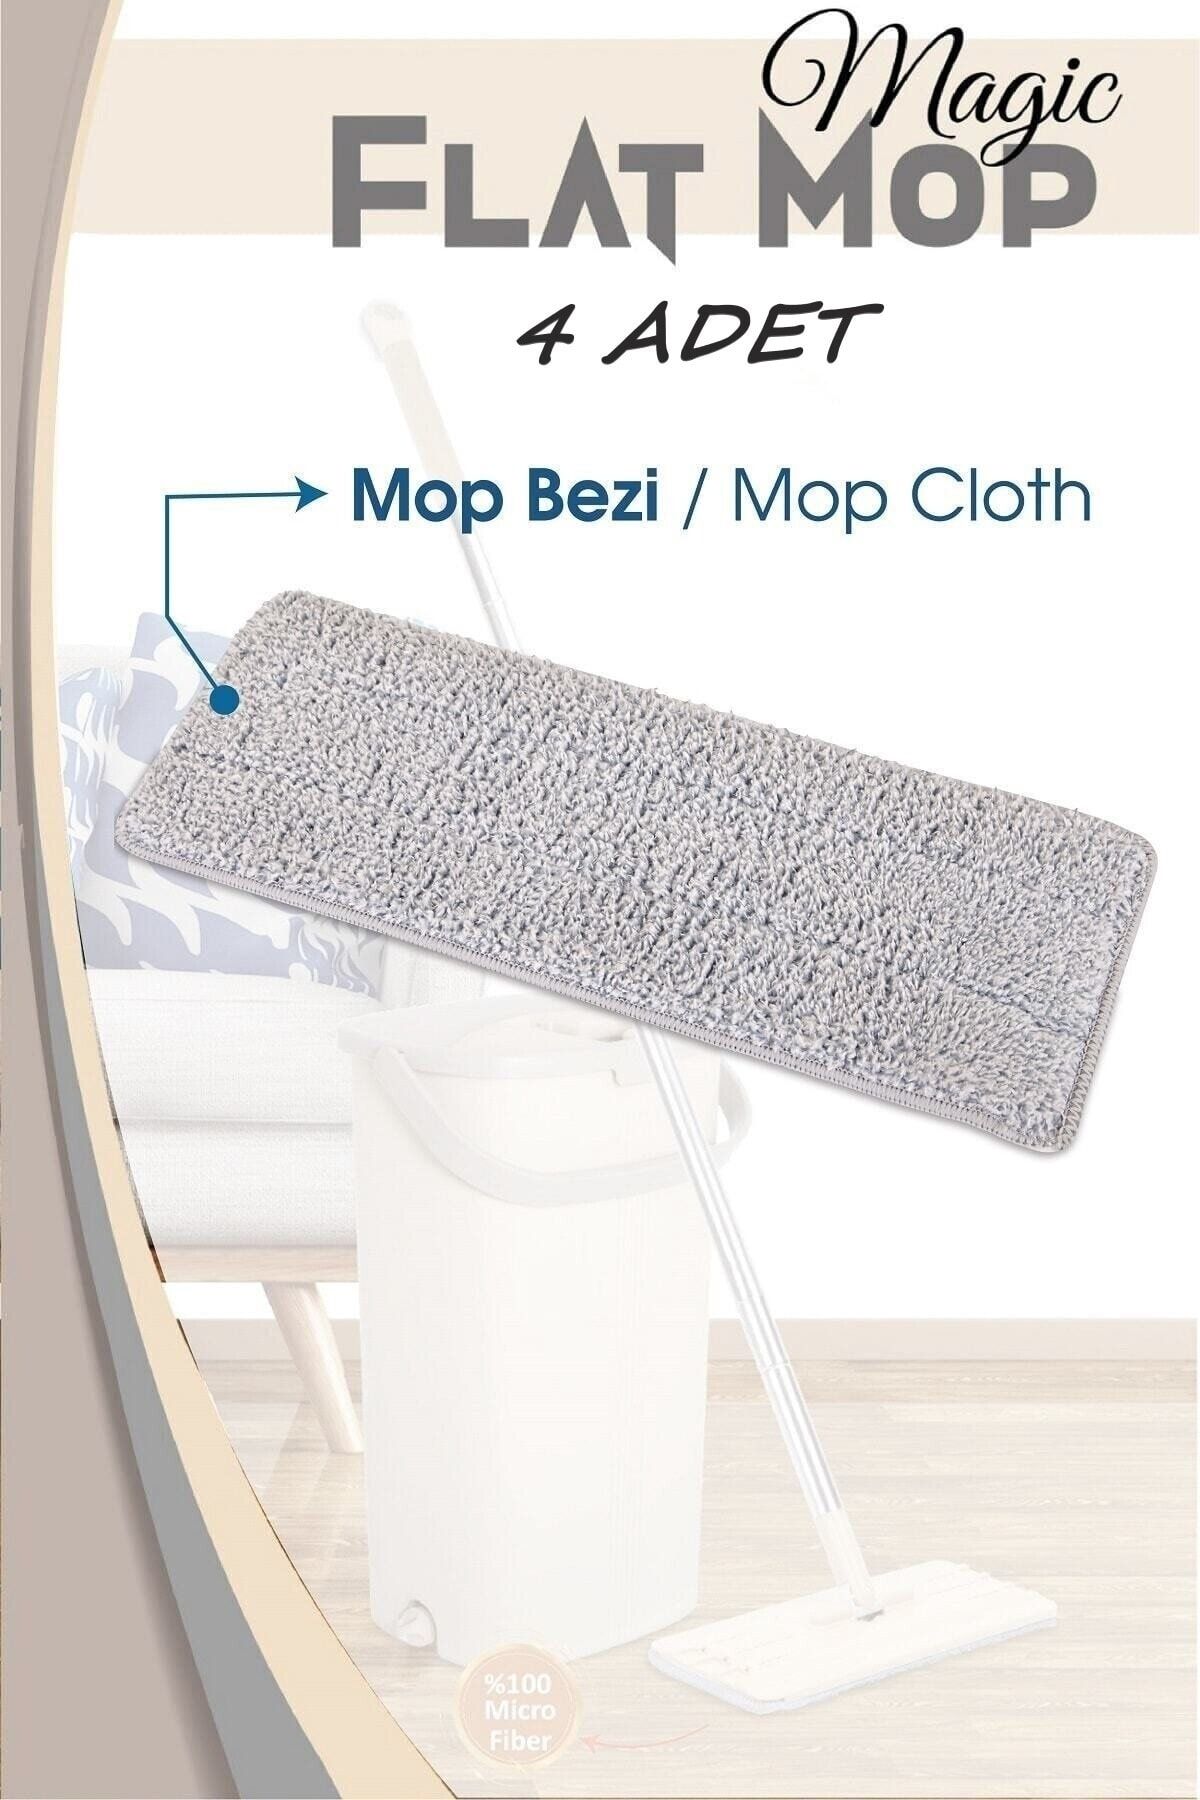 glassepet 4 Adet Magic Flat (TABLET) Mop Yedek Bez